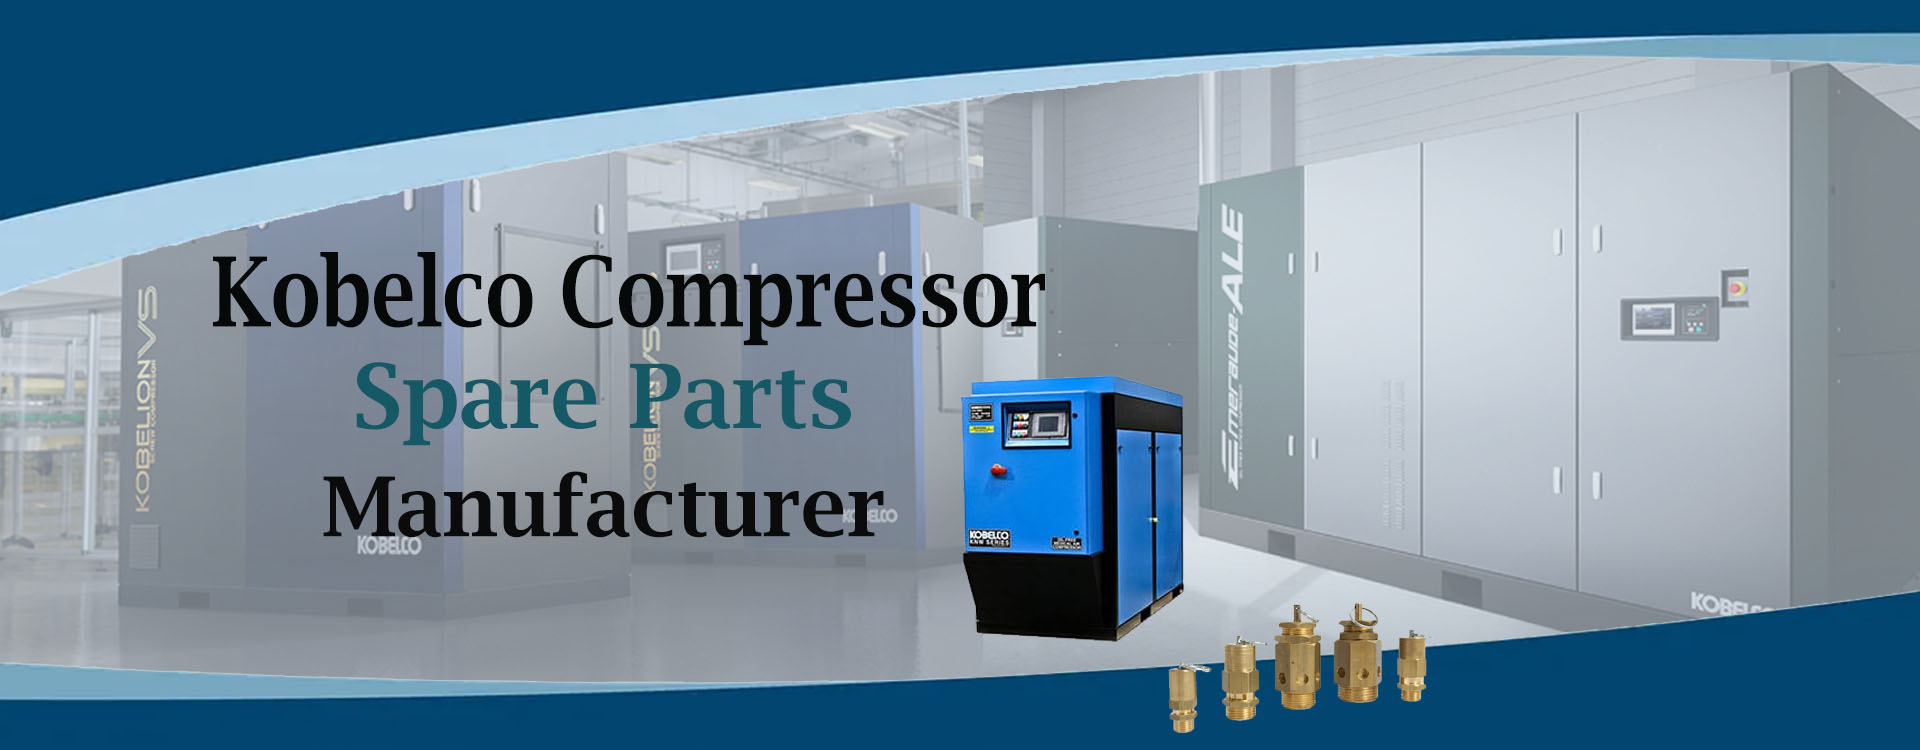 Kobelco Compressor Spare Parts Manufacturer